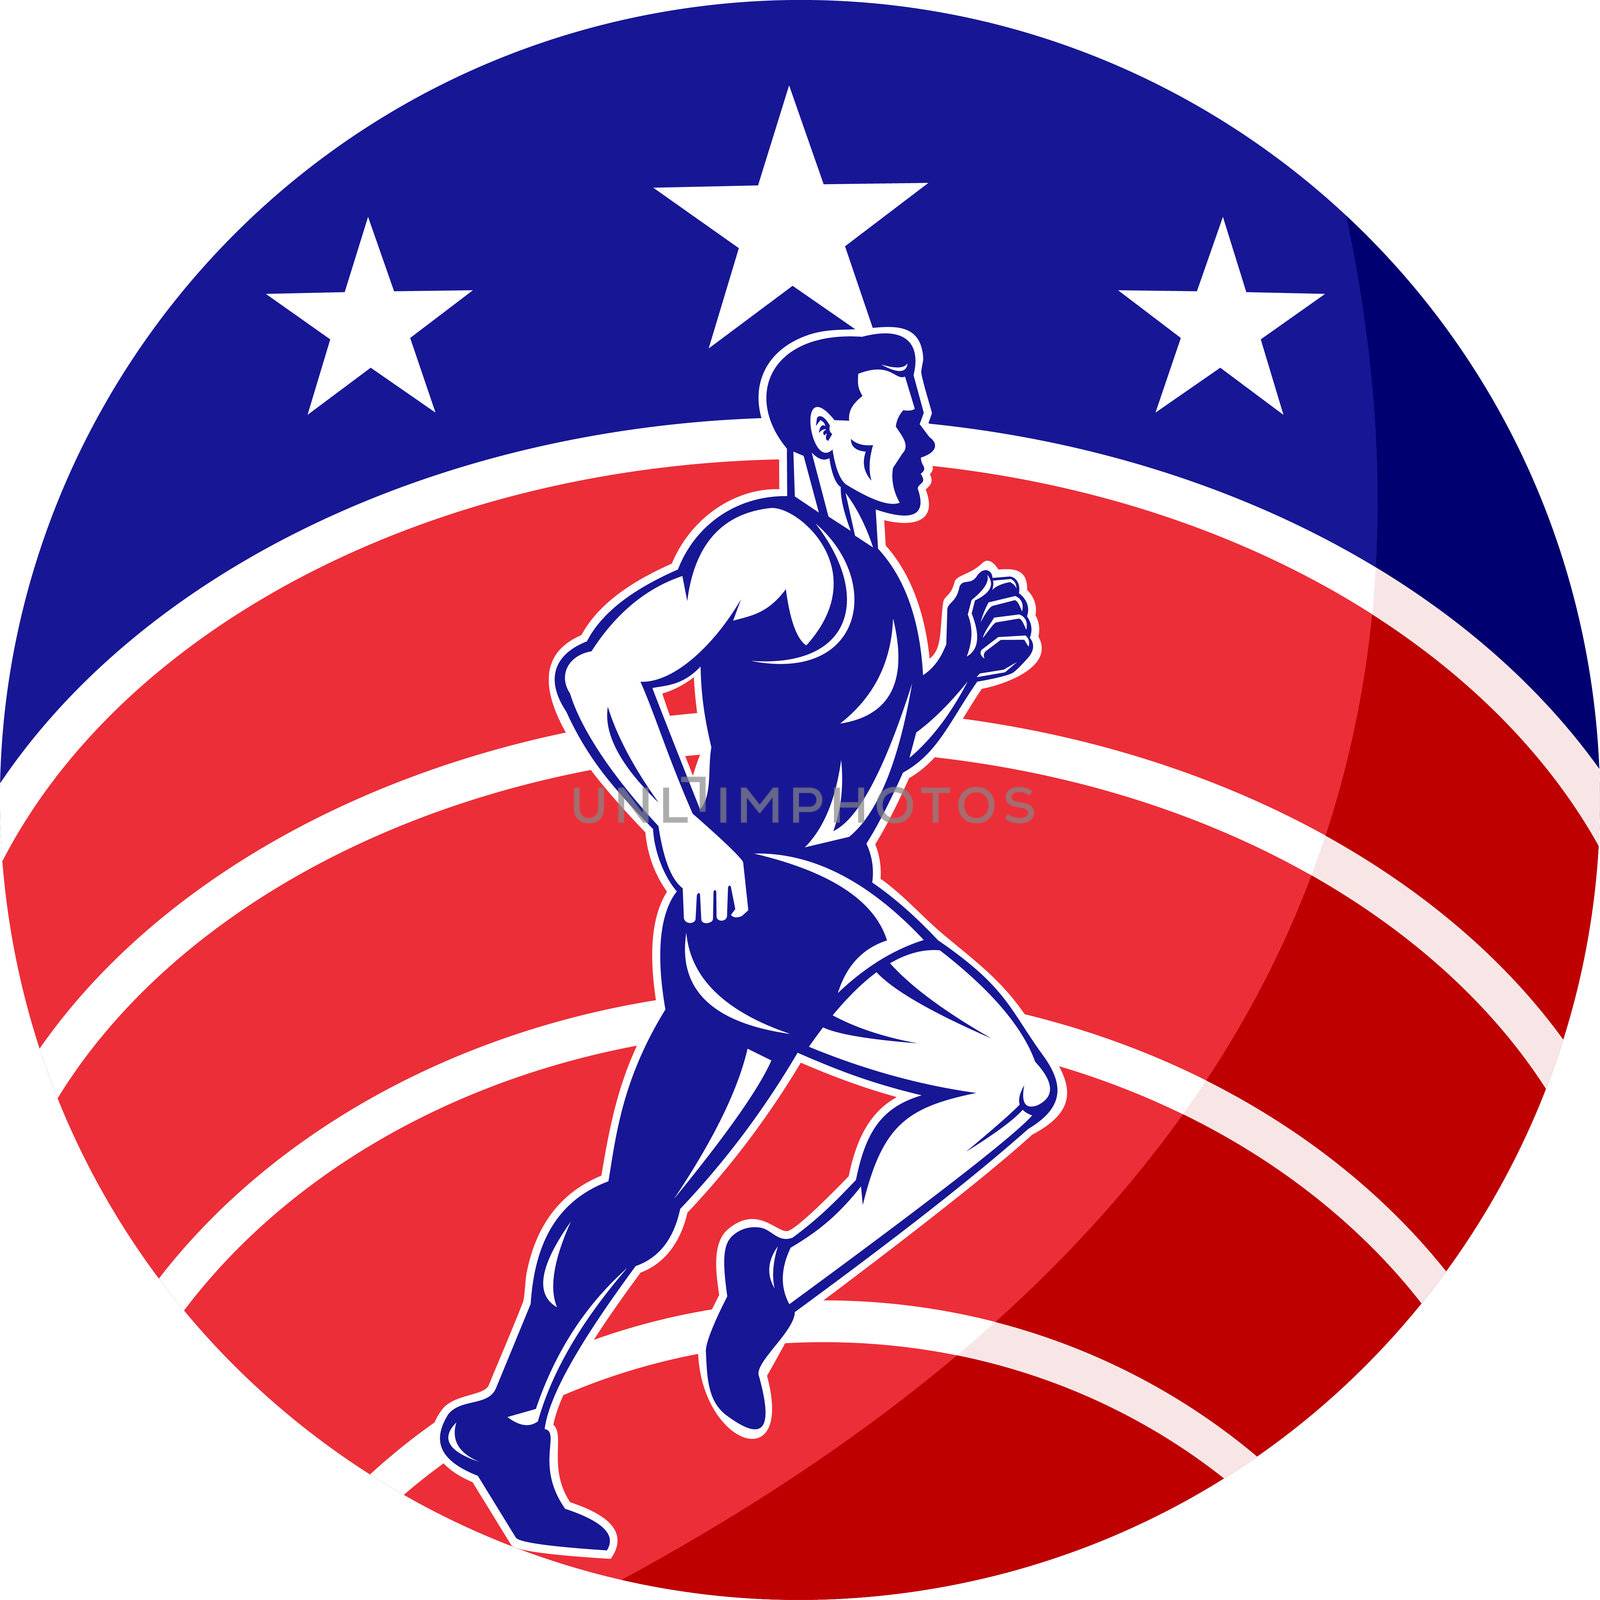 American Marathon runner stars stripes flag by patrimonio